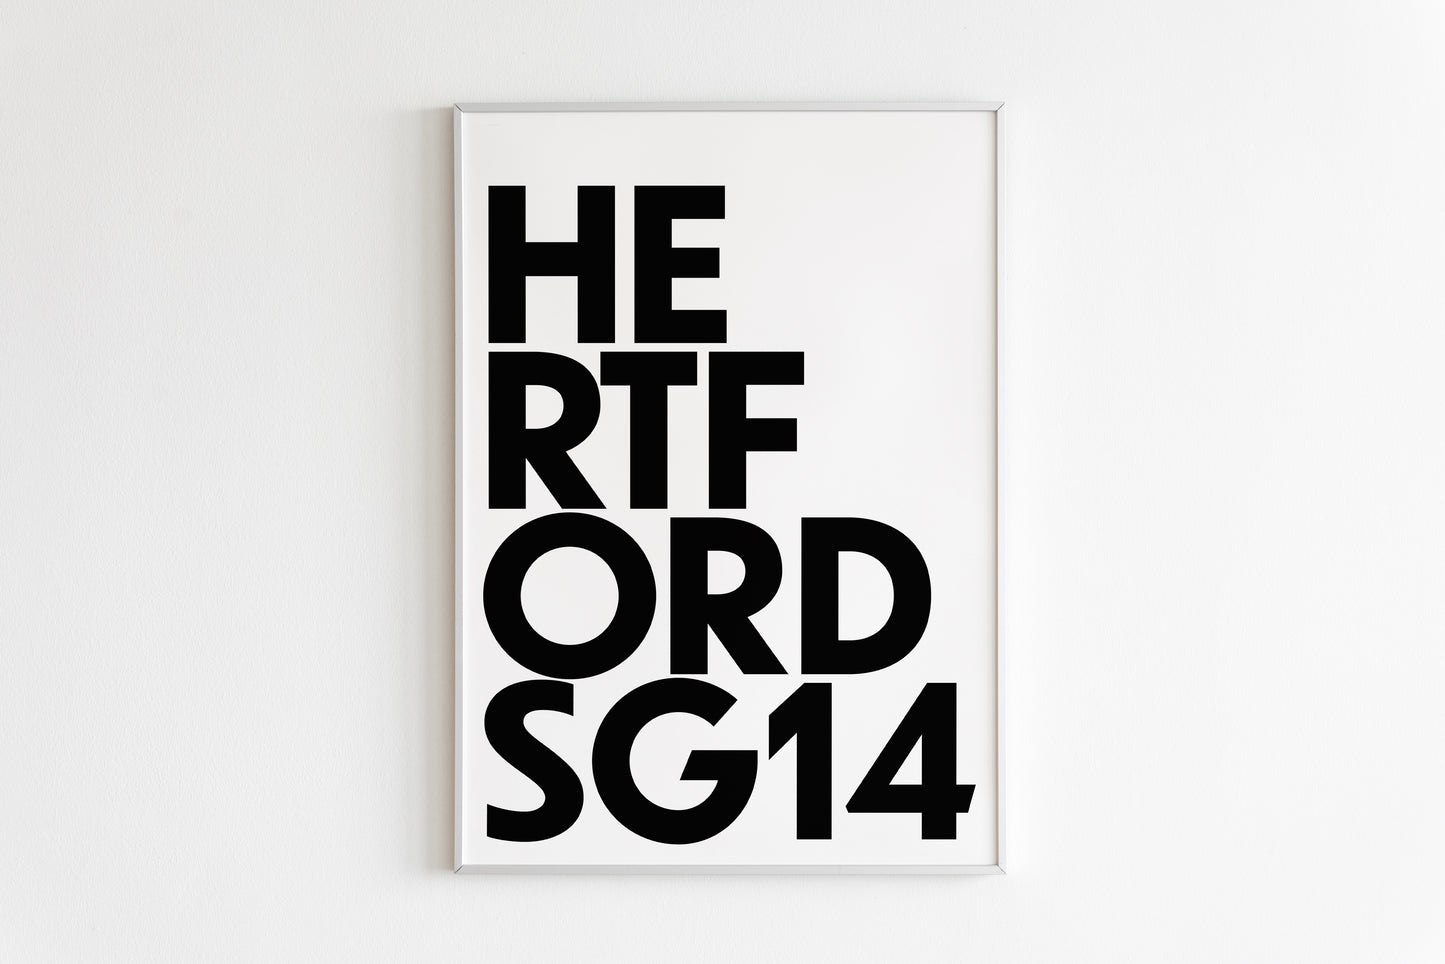 Hertford Monochrome Postcode - Black Text on White Background